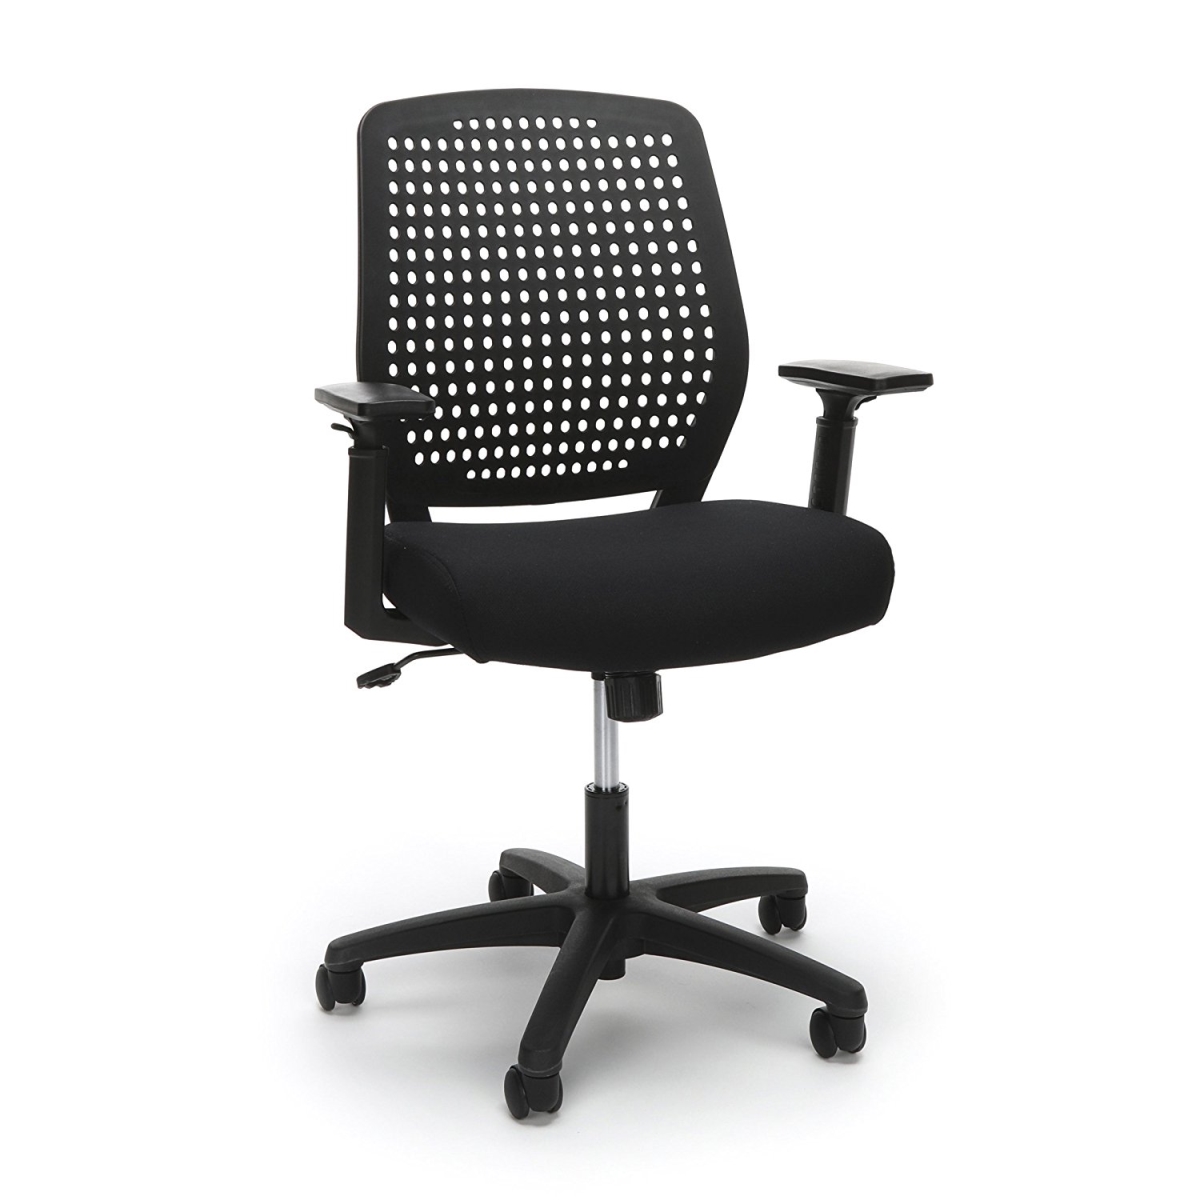 Ess-2055-blk-blk Ess-2055 Model Essentials Model Plastic Back Ergonomic Task Chair, Black & Black